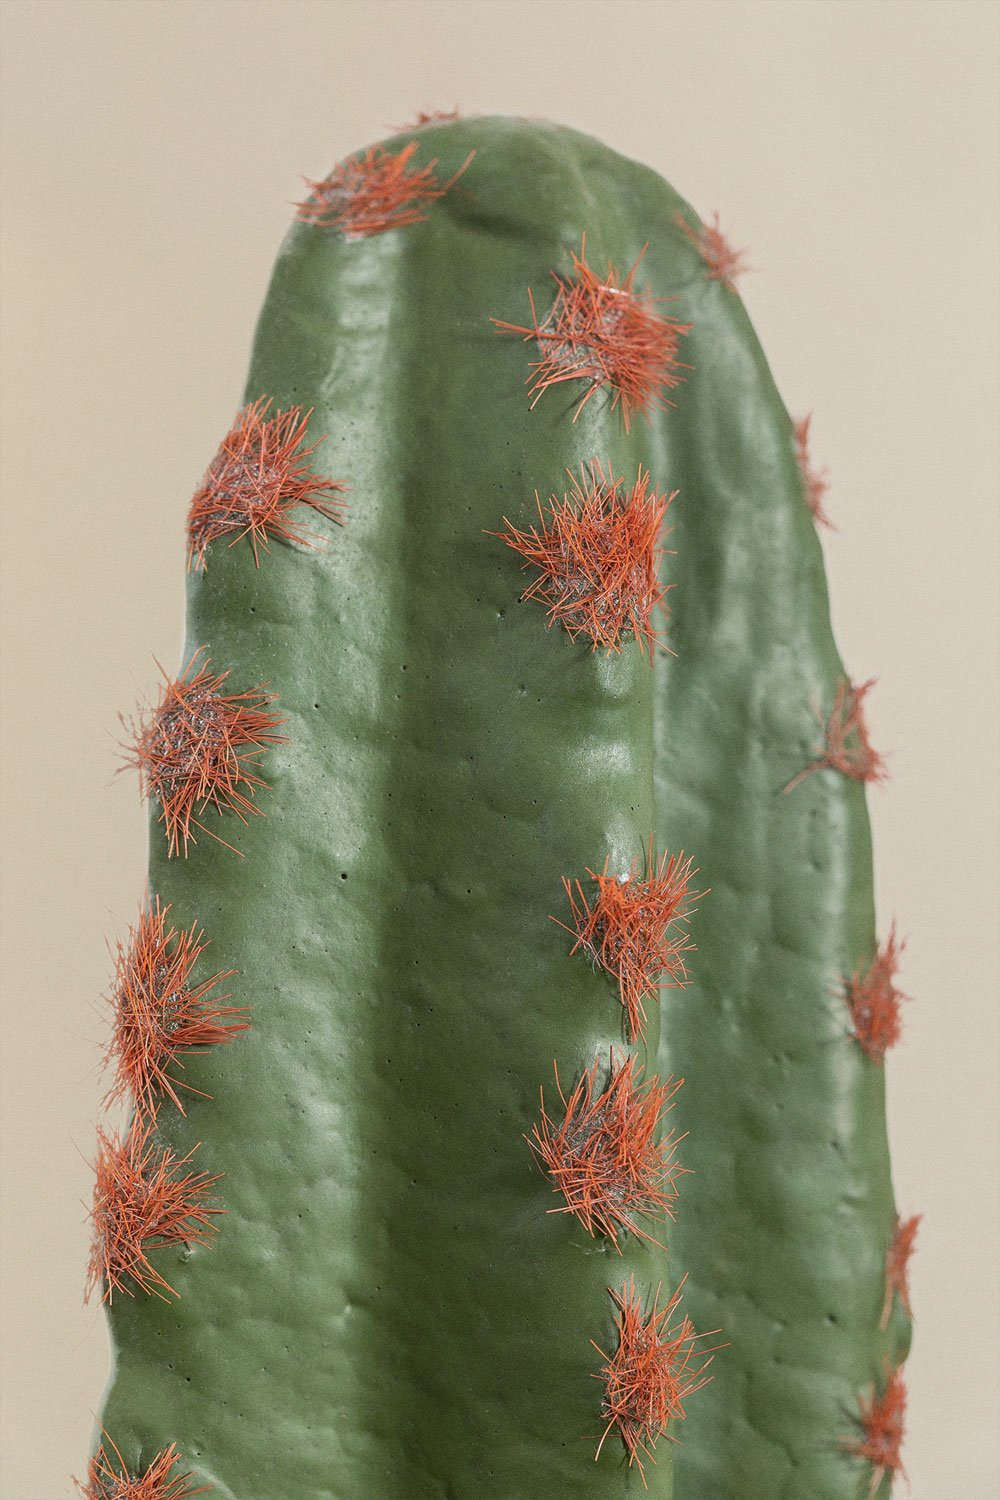 SKLUM Künstlicher Kaktus Cereus Design 86 cm ↑86 cm